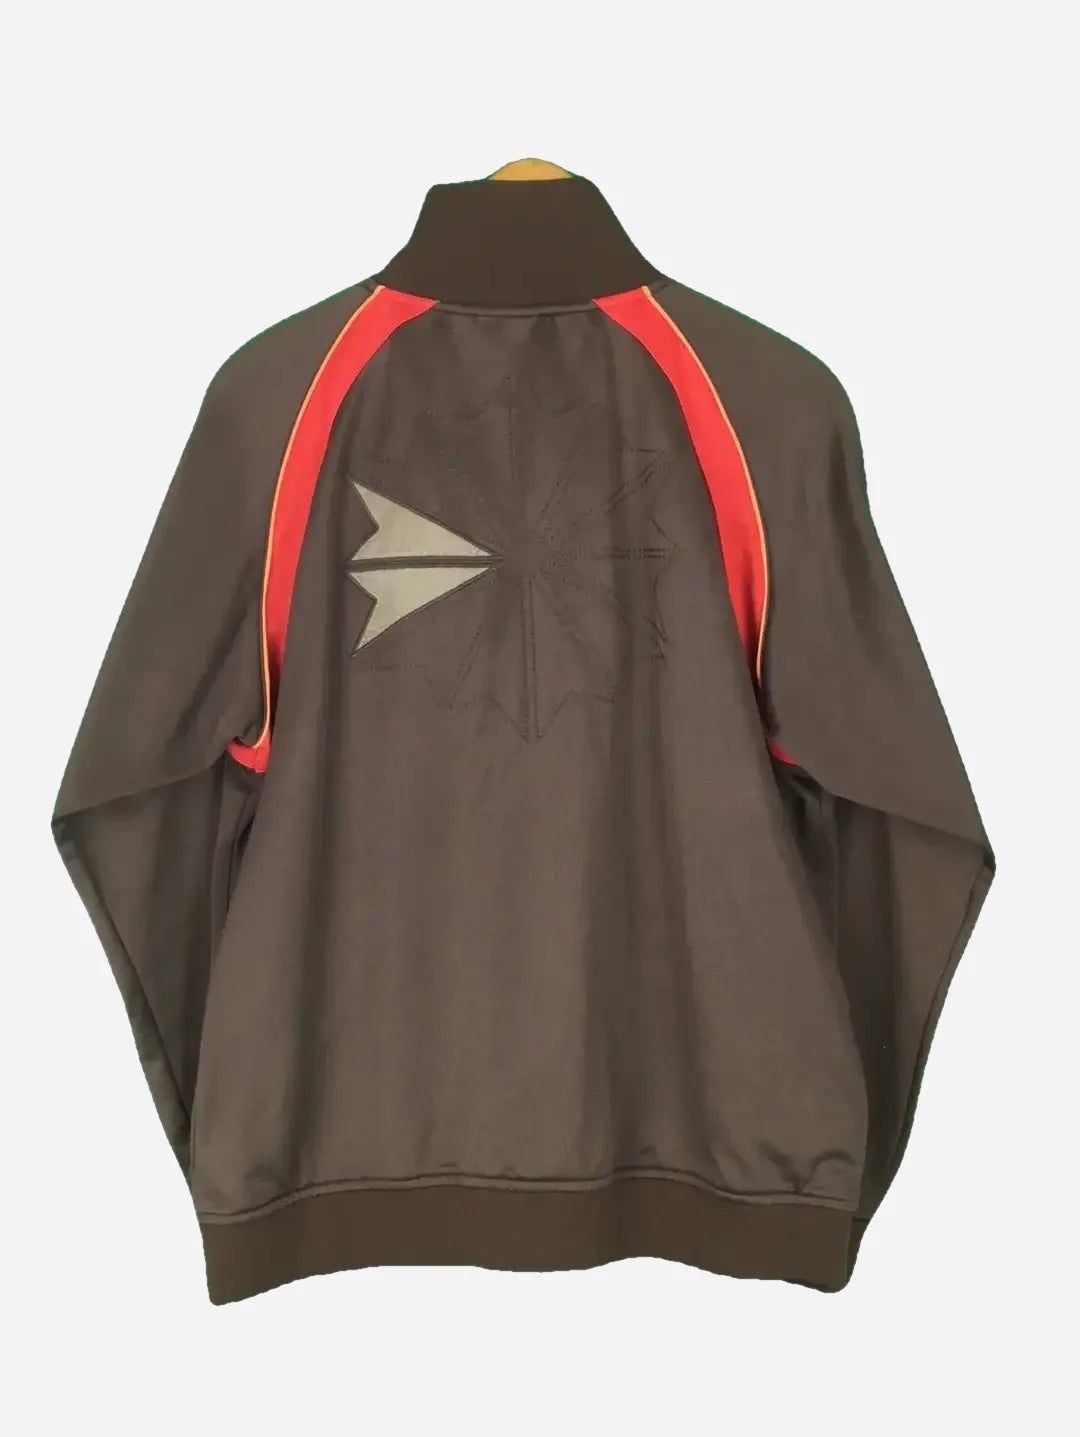 Reebok track jacket (M)